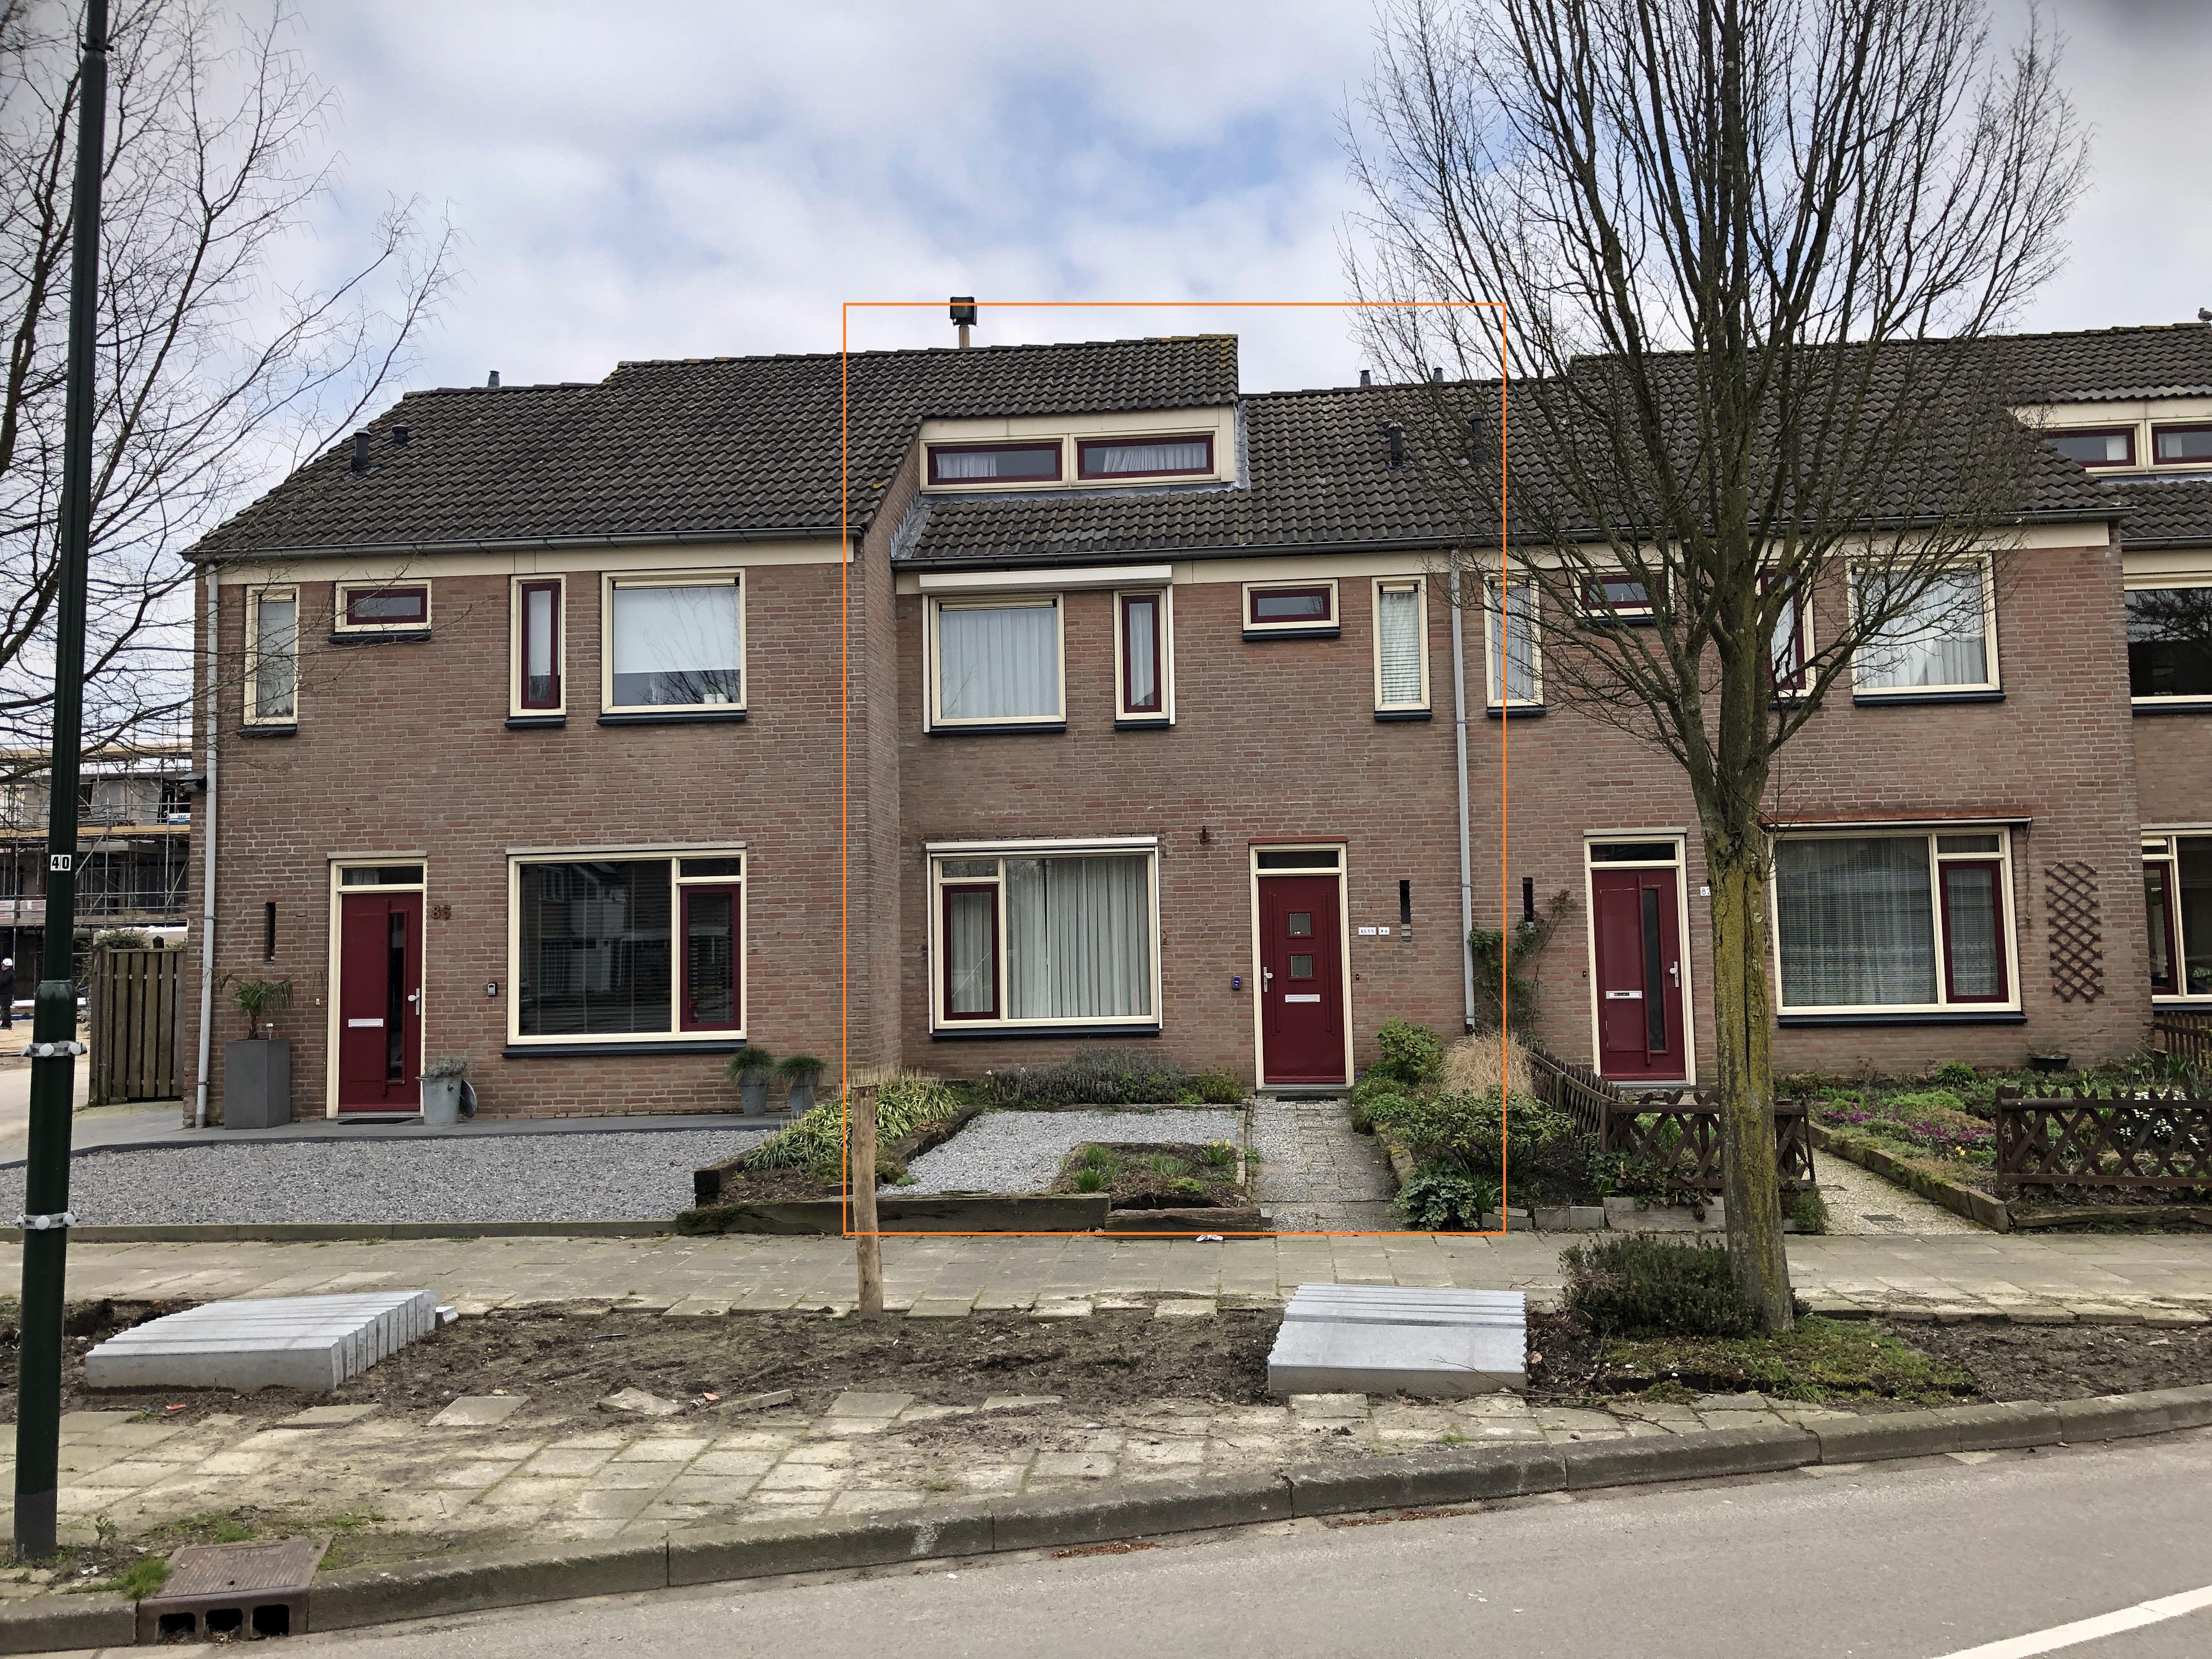 Albinonistraat 84, 5283 KT Boxtel, Nederland